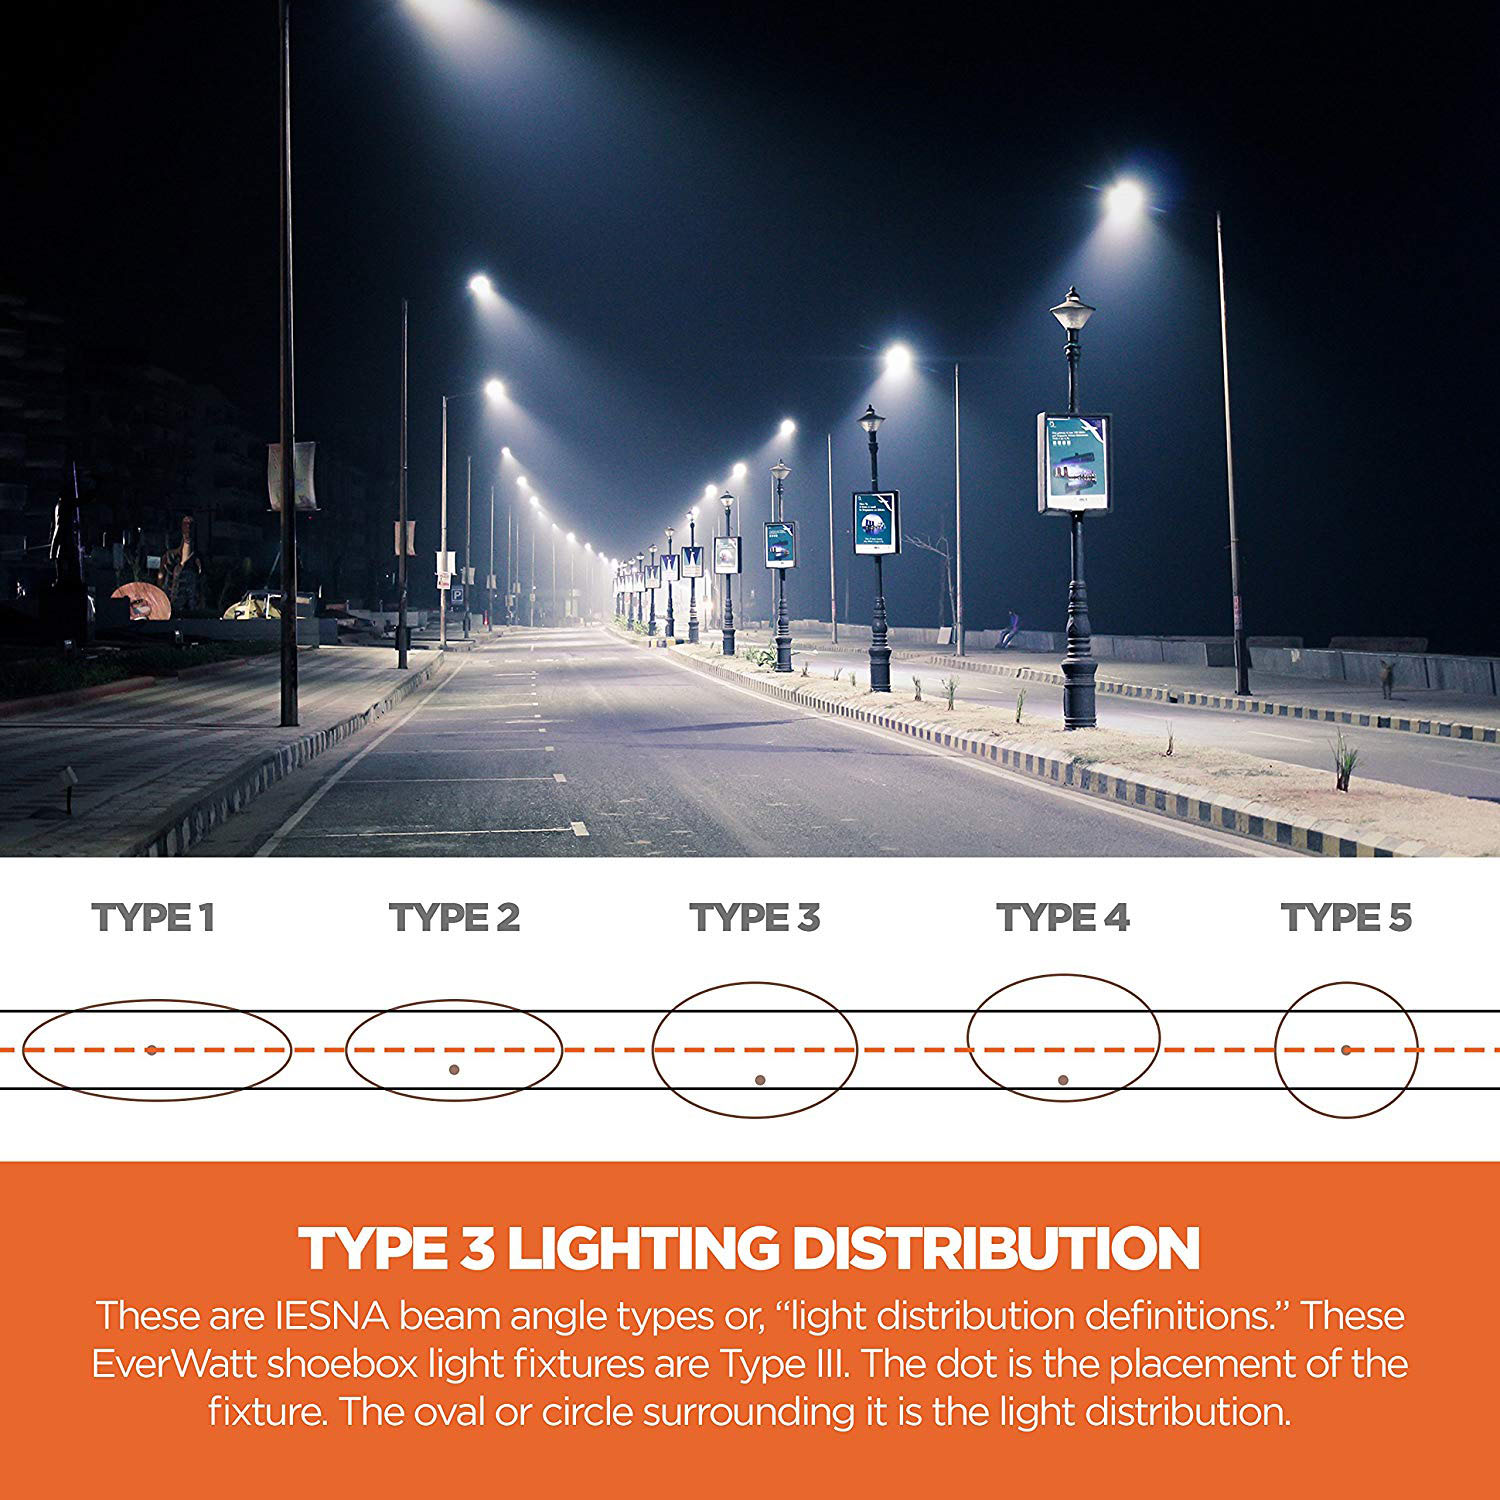 Explanation of lighting distribution types